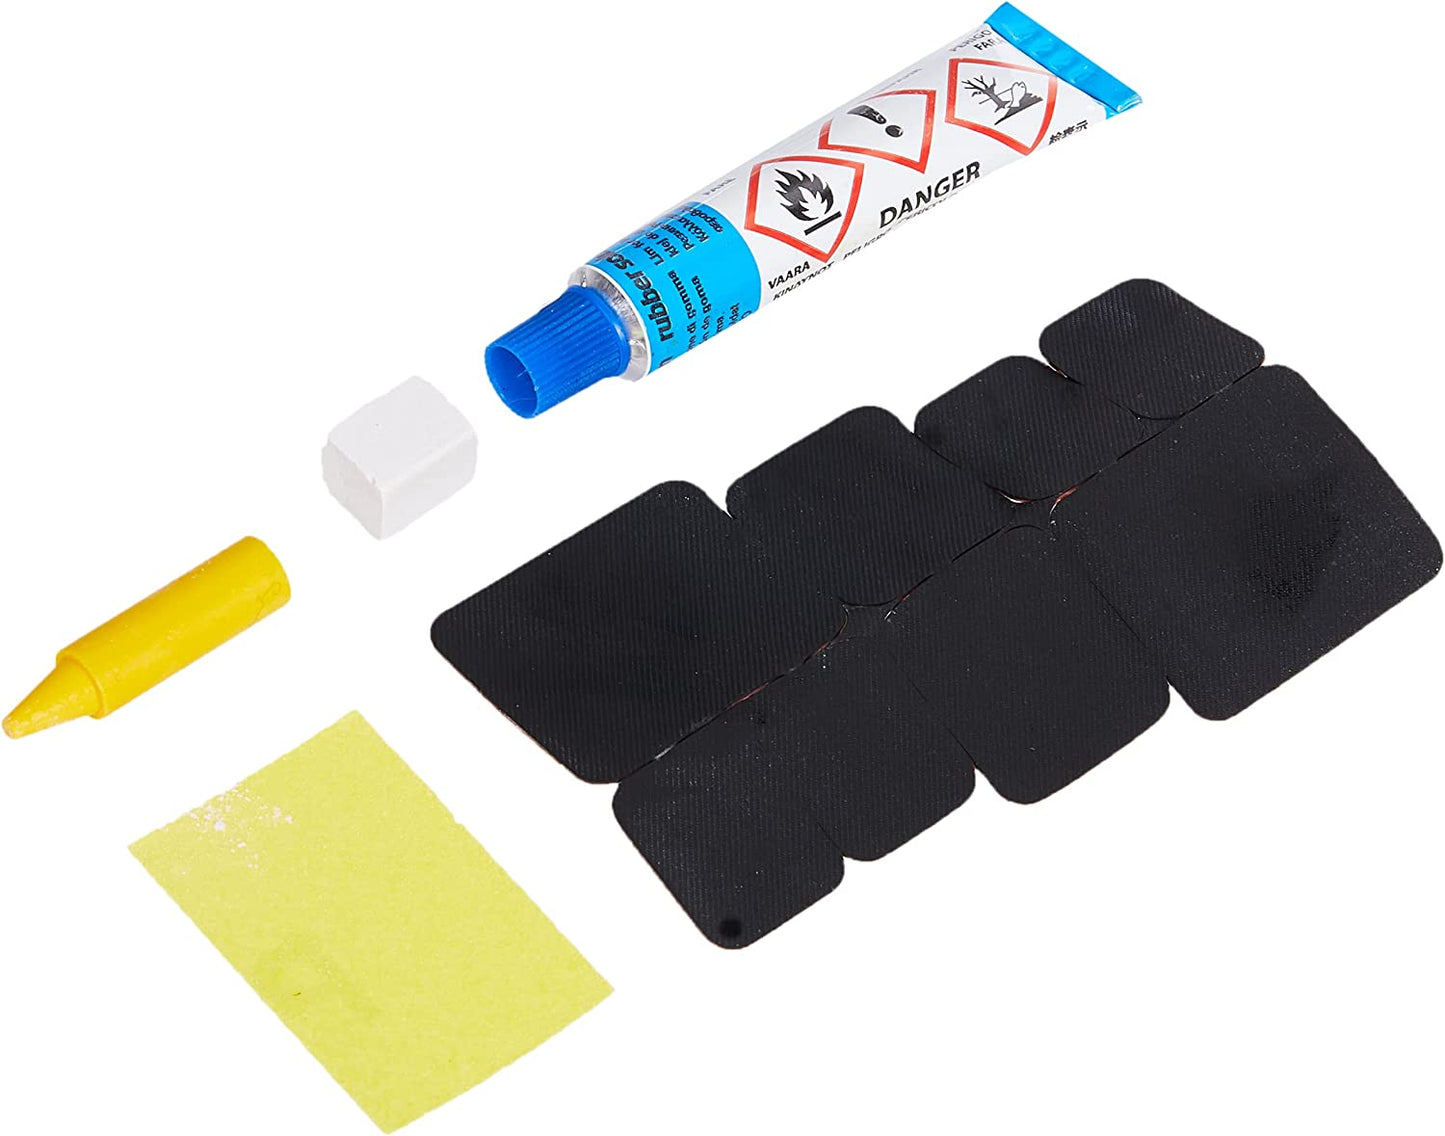 Unisex'S Puncture Repair Kit, Black, One Size